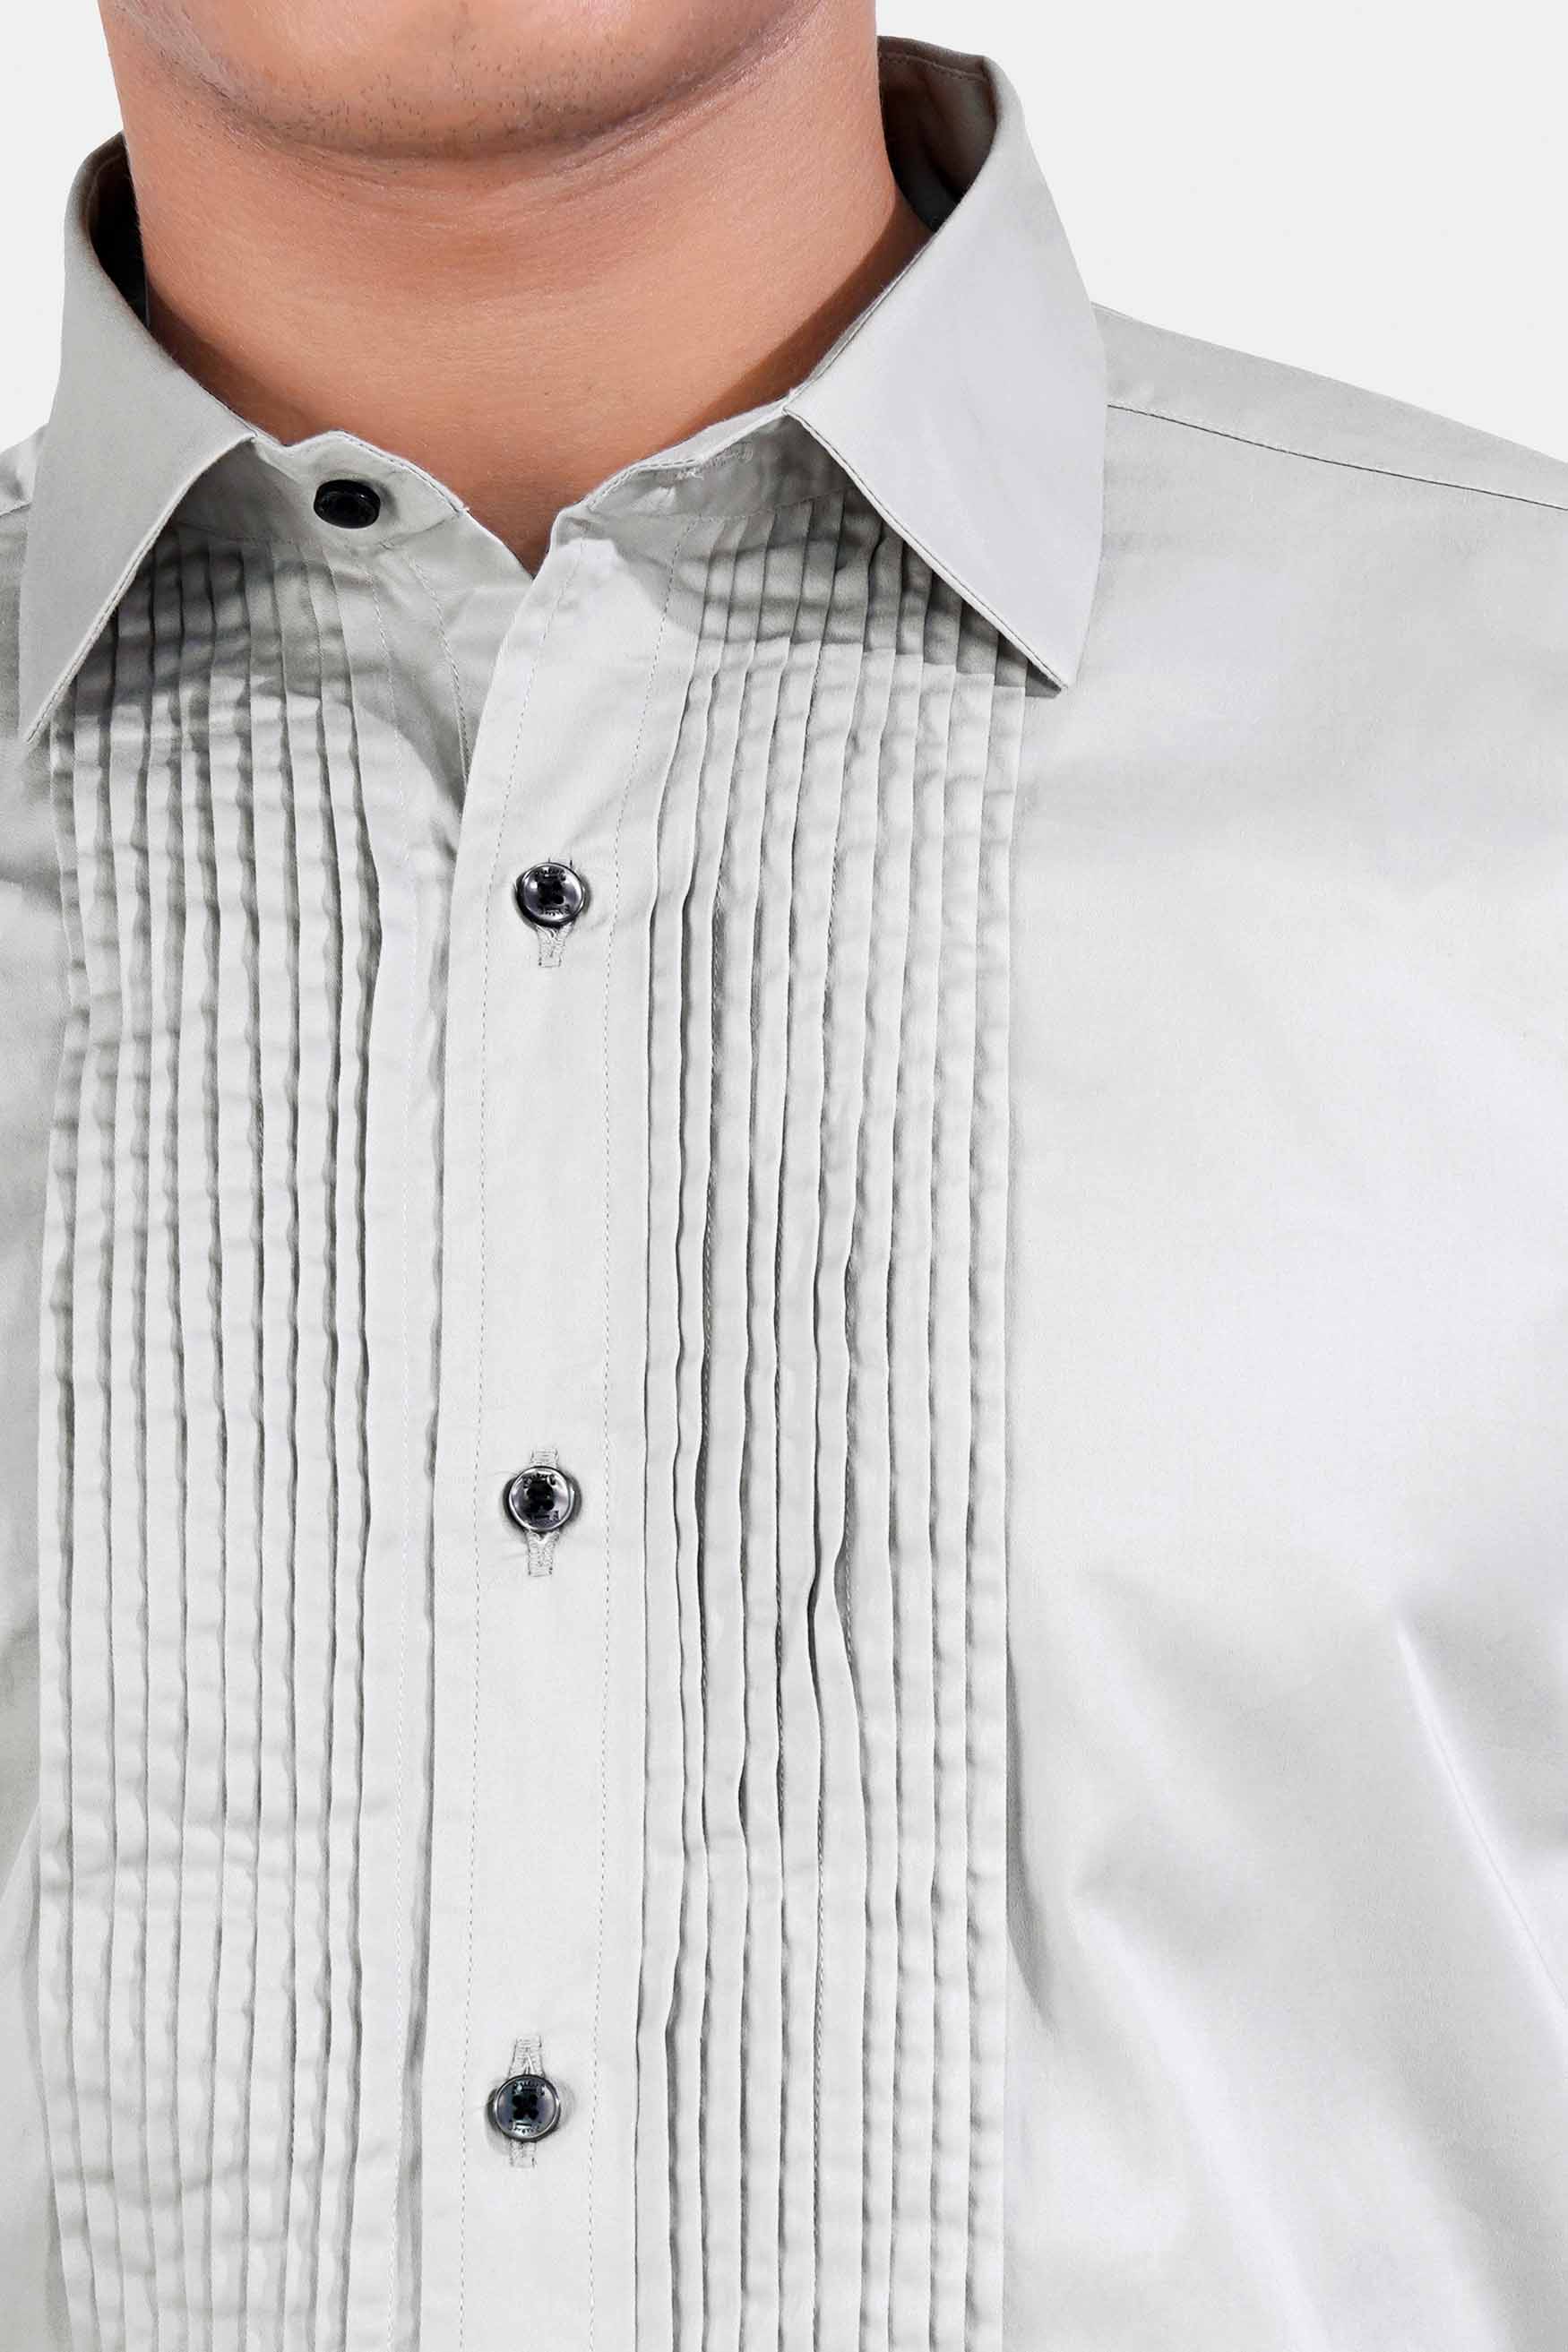 Gainsboro Gray Subtle Sheen Super Soft Premium Cotton Tuxedo Shirt